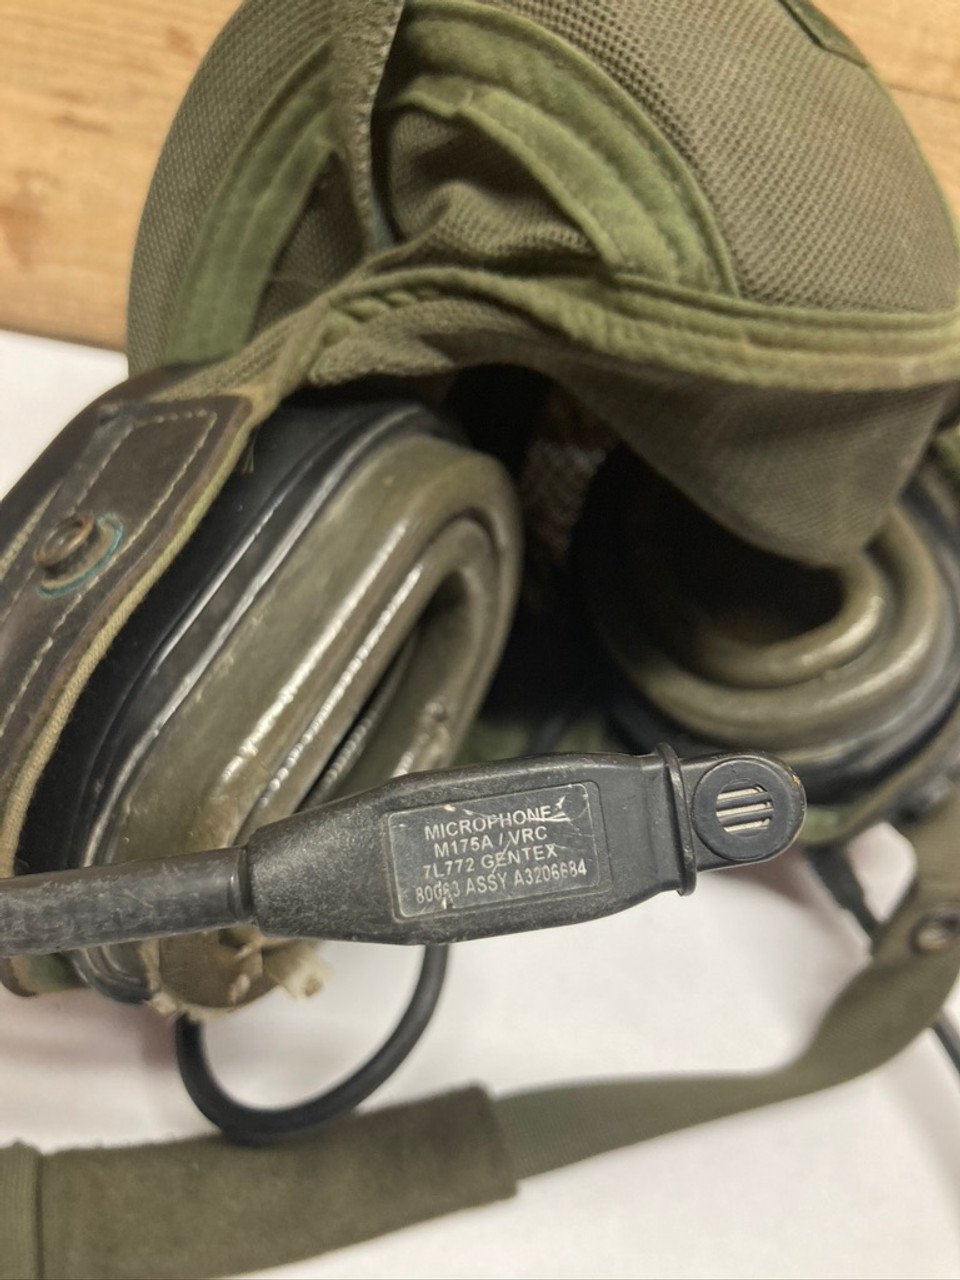 Combat Vehicle Crewman Helmet Liner Headset A3206617-3 Bose/Gentex Large (Used)